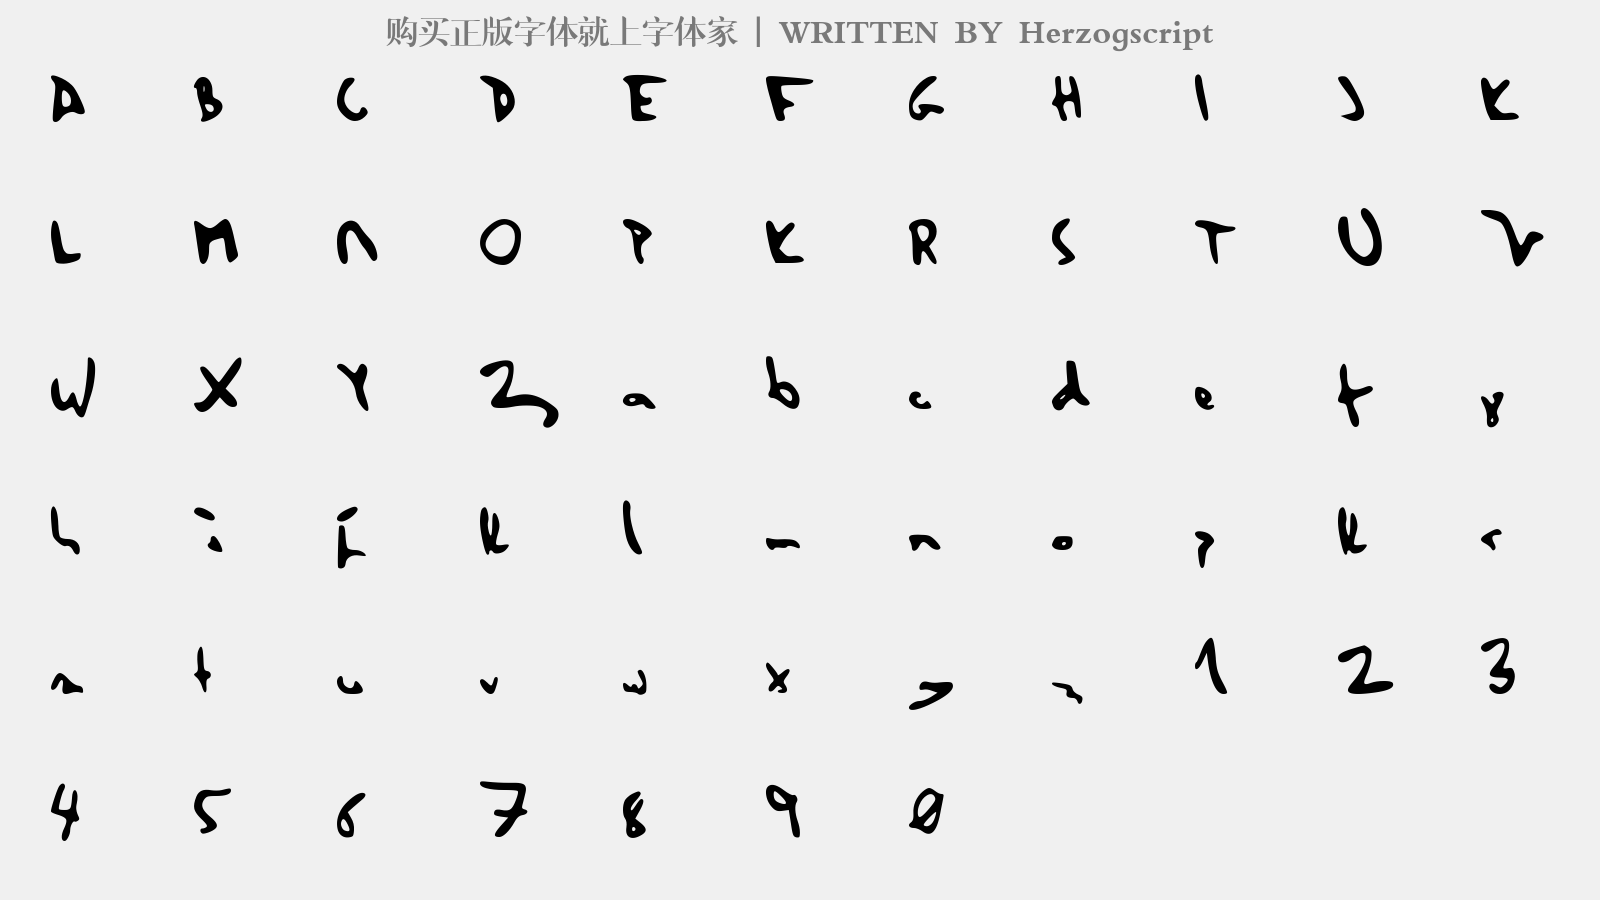 Herzogscript - 大写字母/小写字母/数字